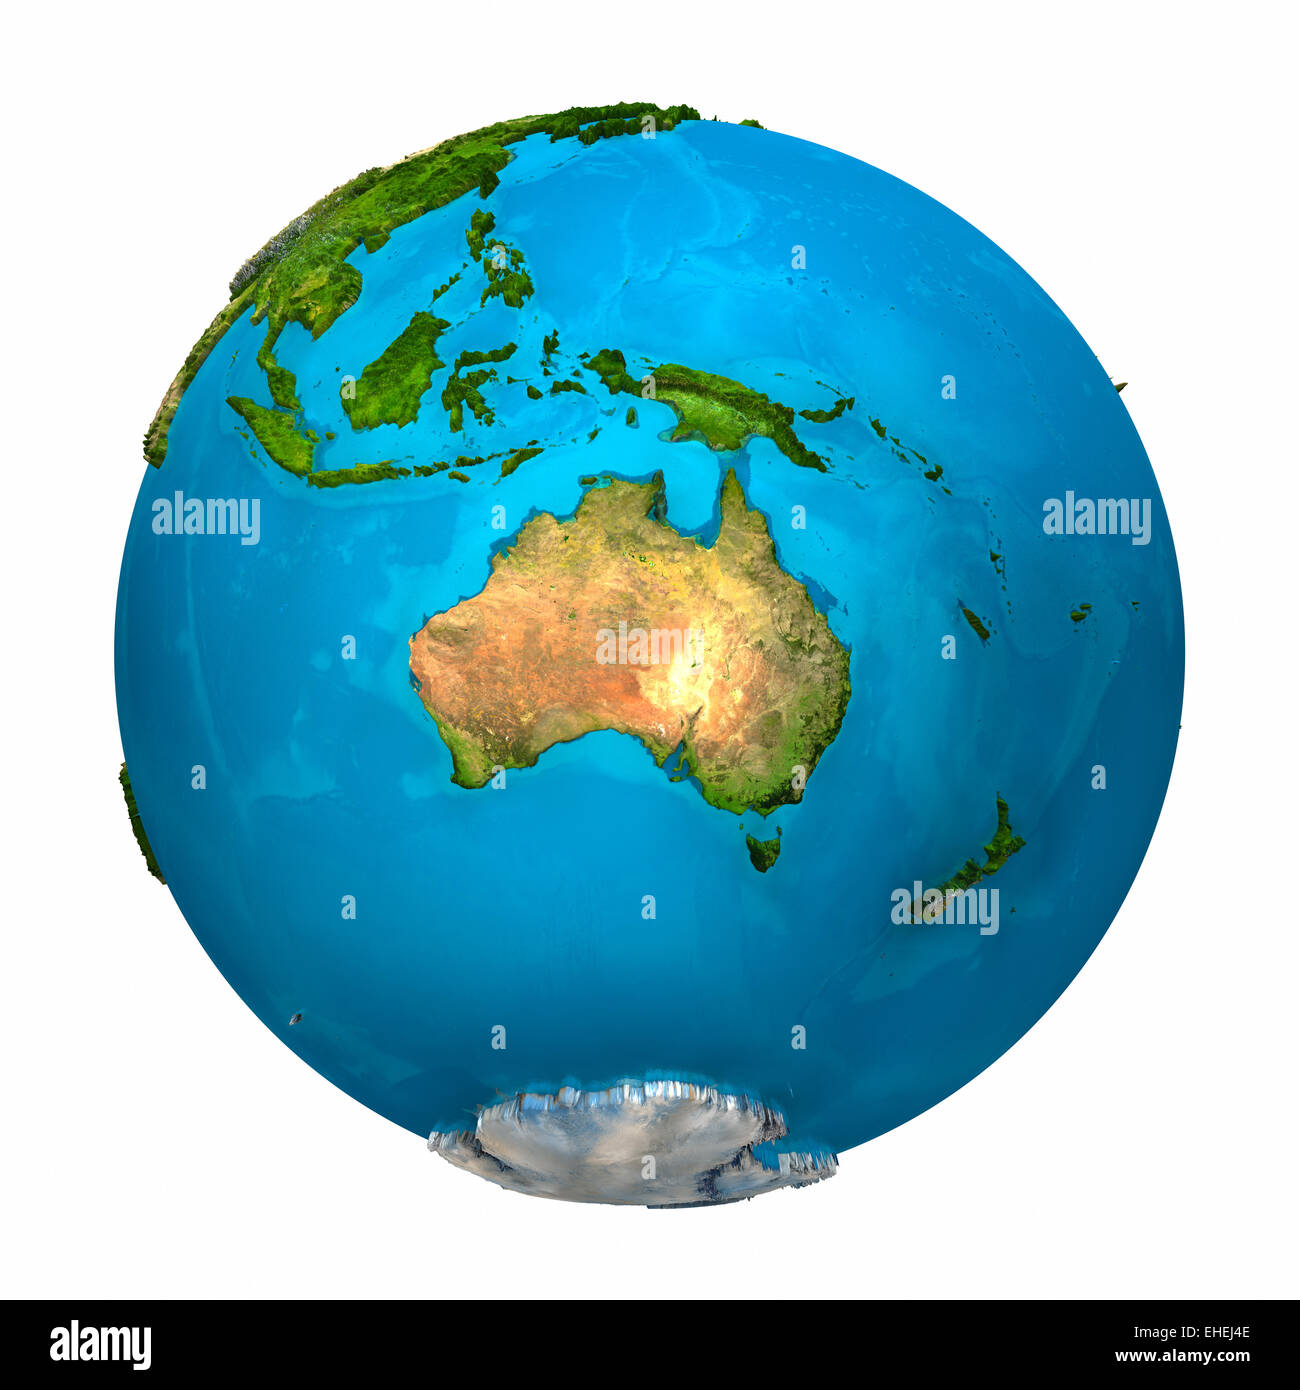 Planet Earth - Australia Stock Photo